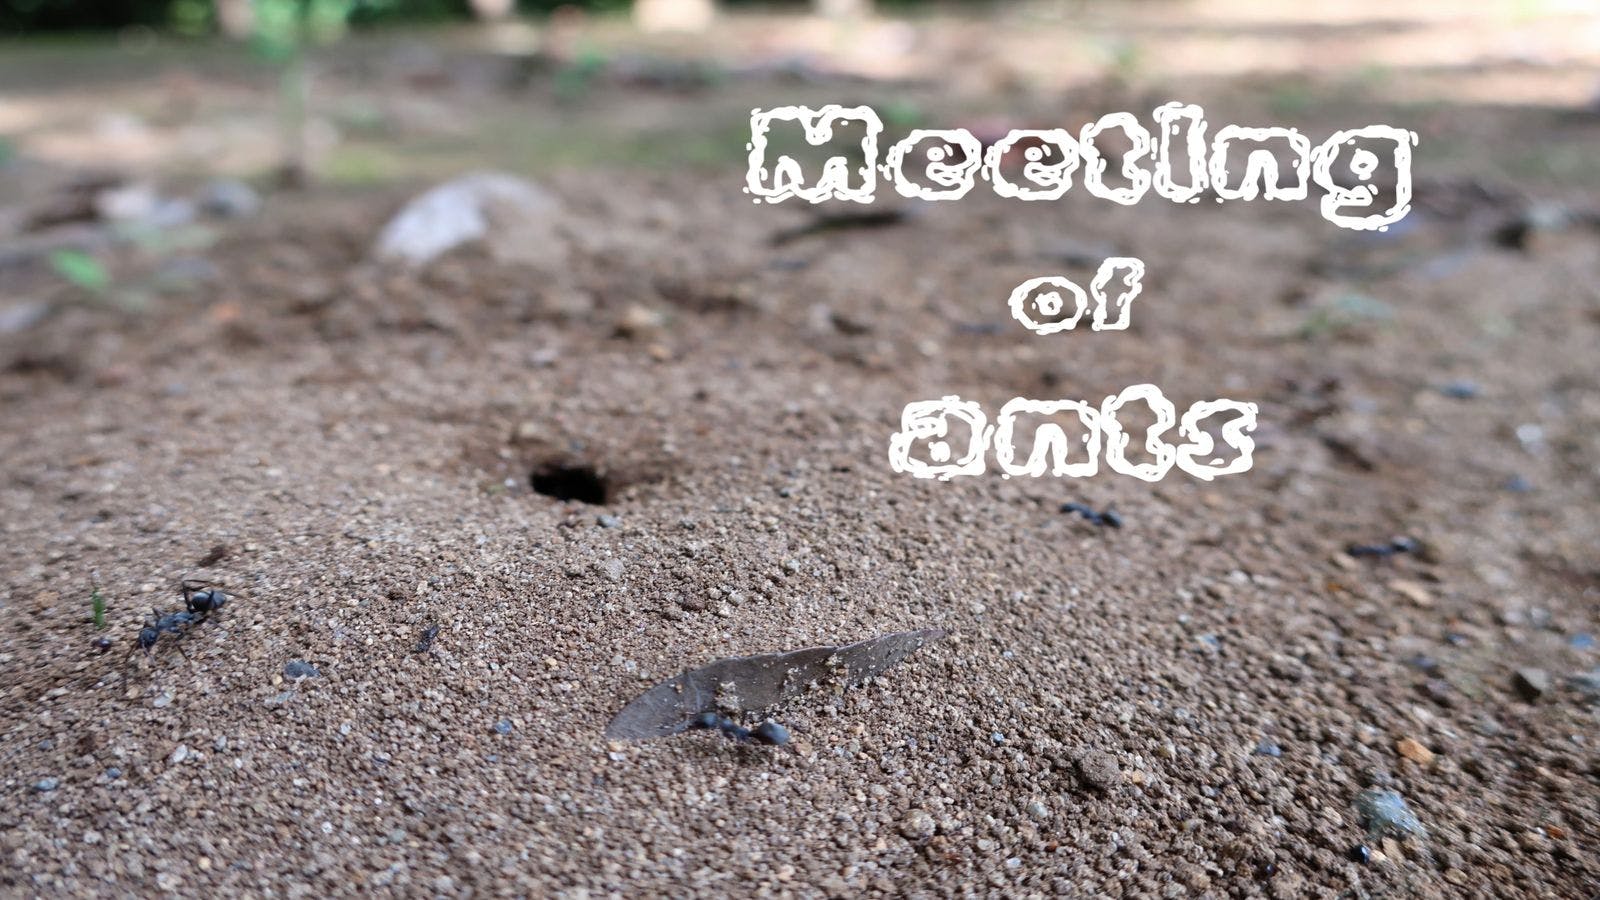 Meeting of ants